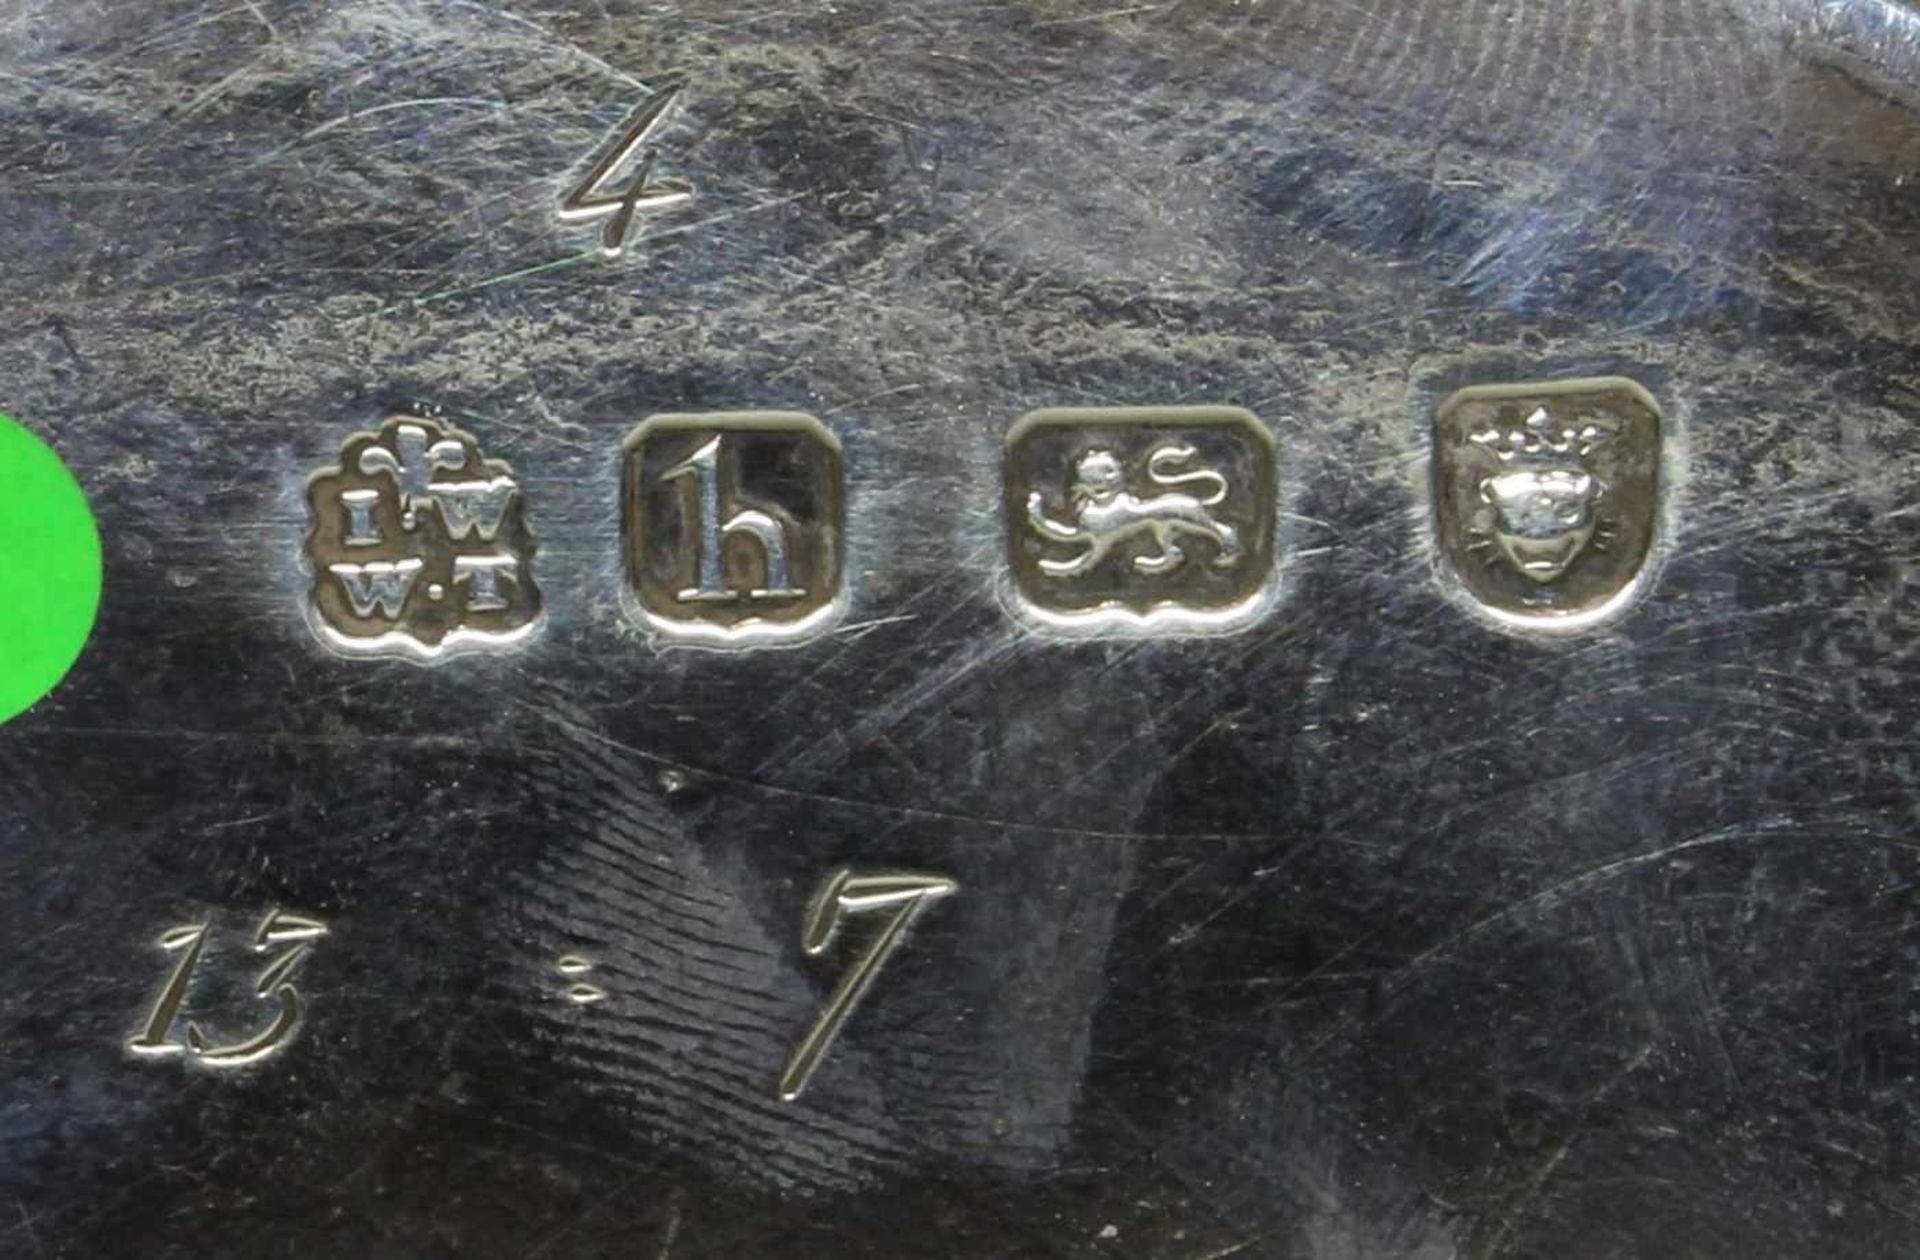 Salver, Silber 925, London, 1783, John Wakelin & William Taylor, oval, glatter Spiegel mit Emblem, - Image 6 of 6